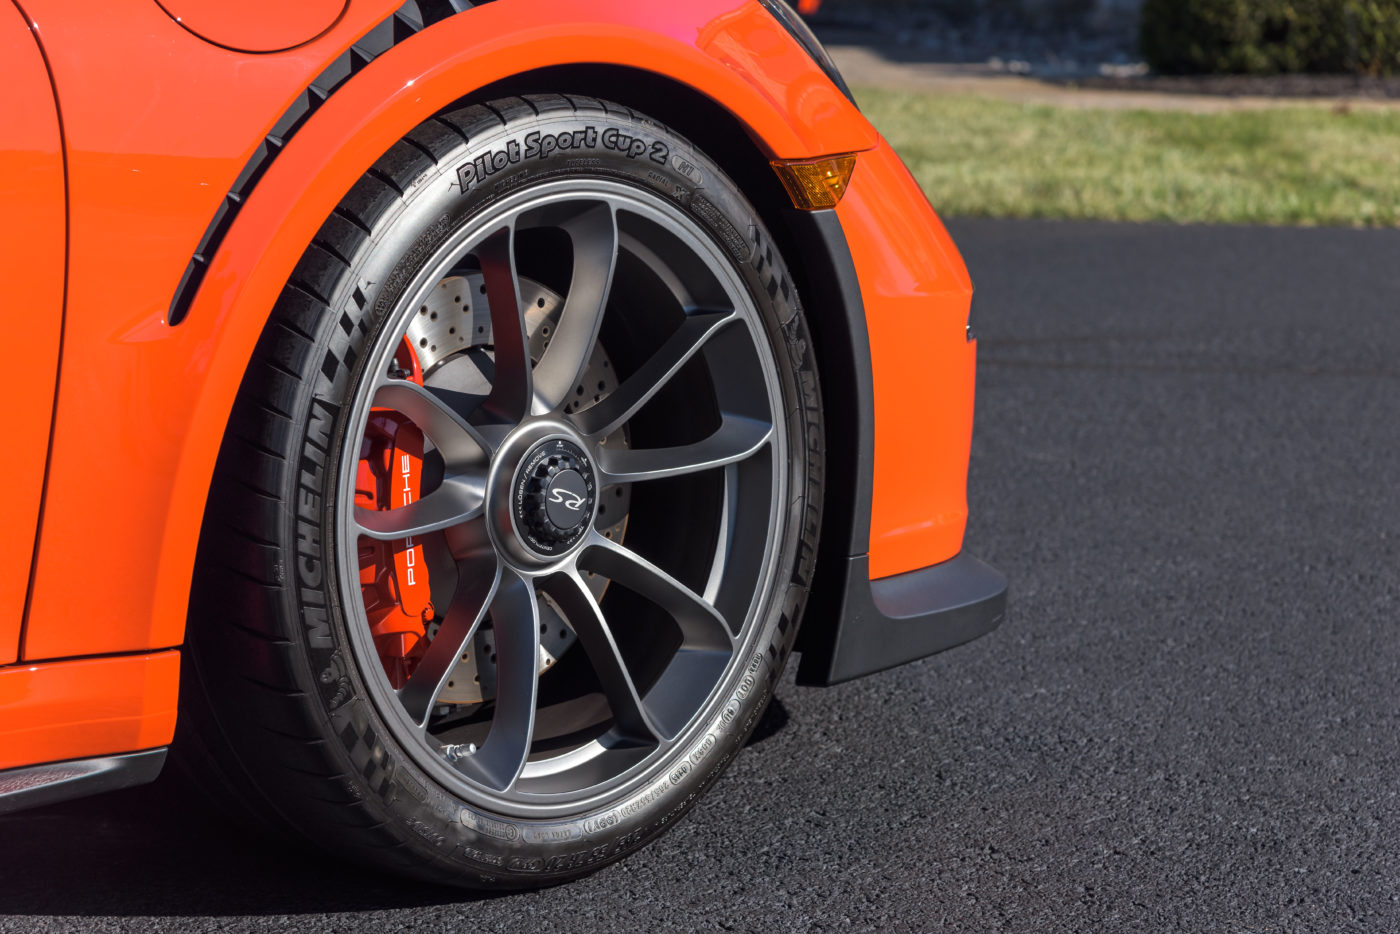 Porsche 911 GT3 RS specs demand the best brakes in the world